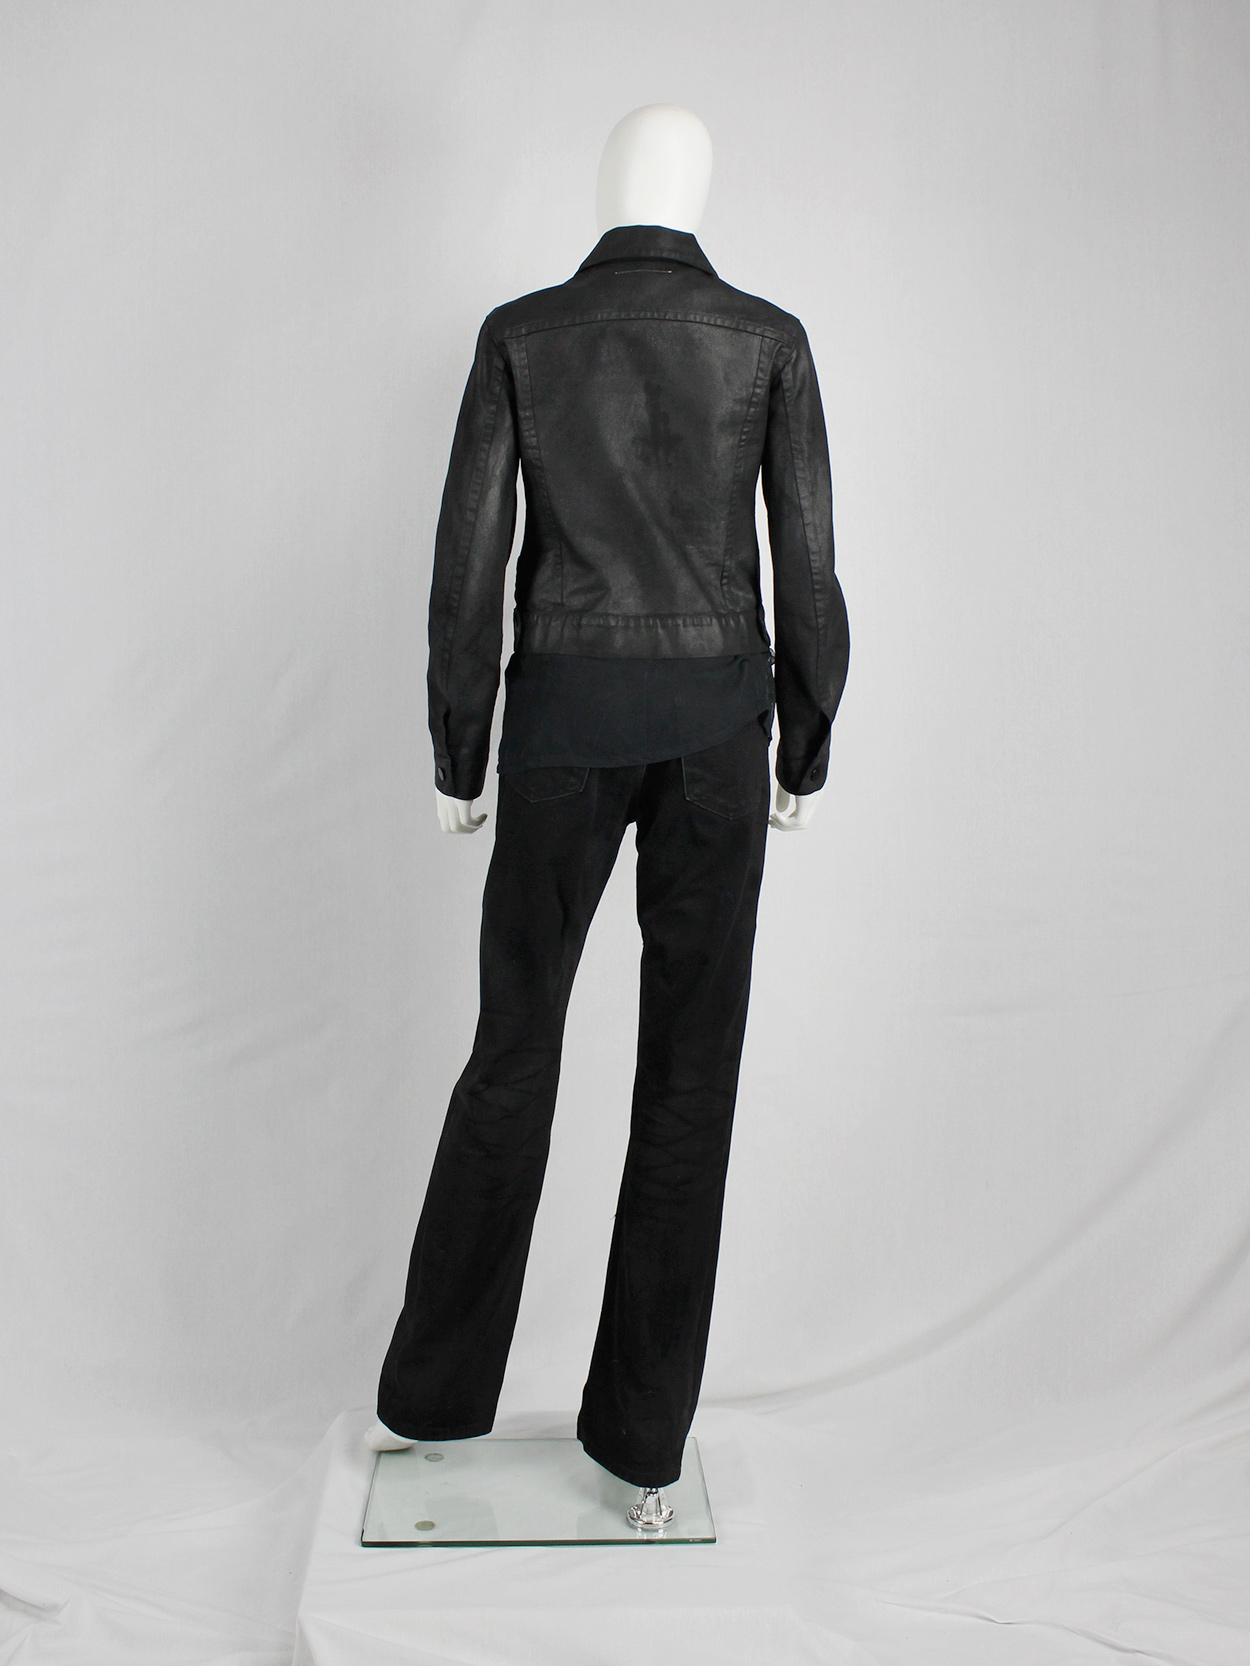 vaniitas archive Maison Martin Margiela 6 black coated denim jacket 1997 (12)